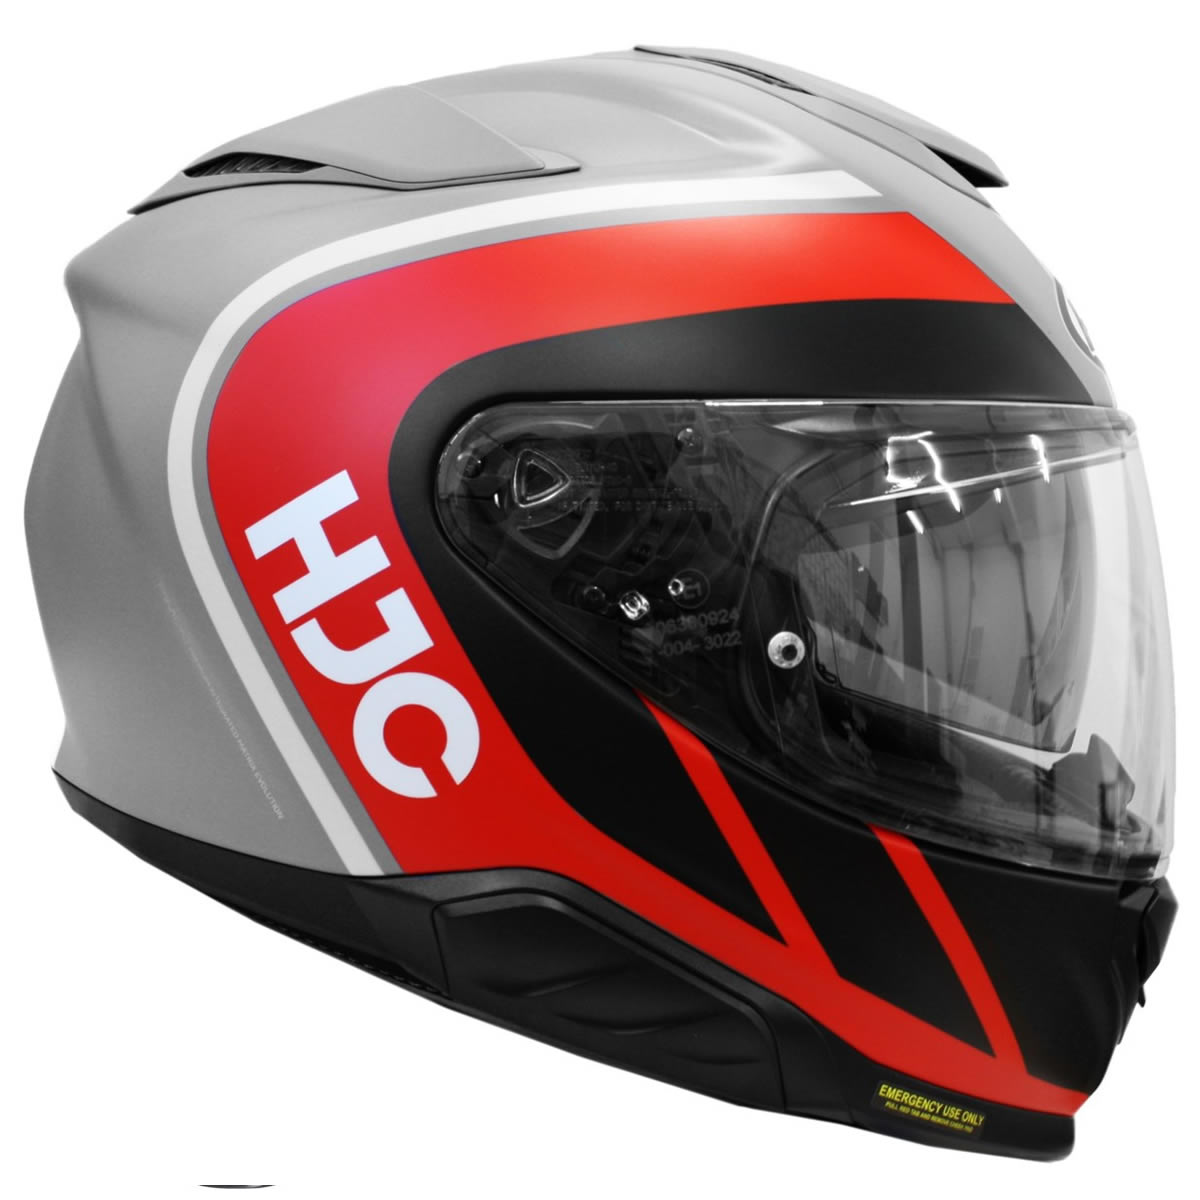 HJC Helm RPHA 71 Mapos, grau-schwarz-rot matt